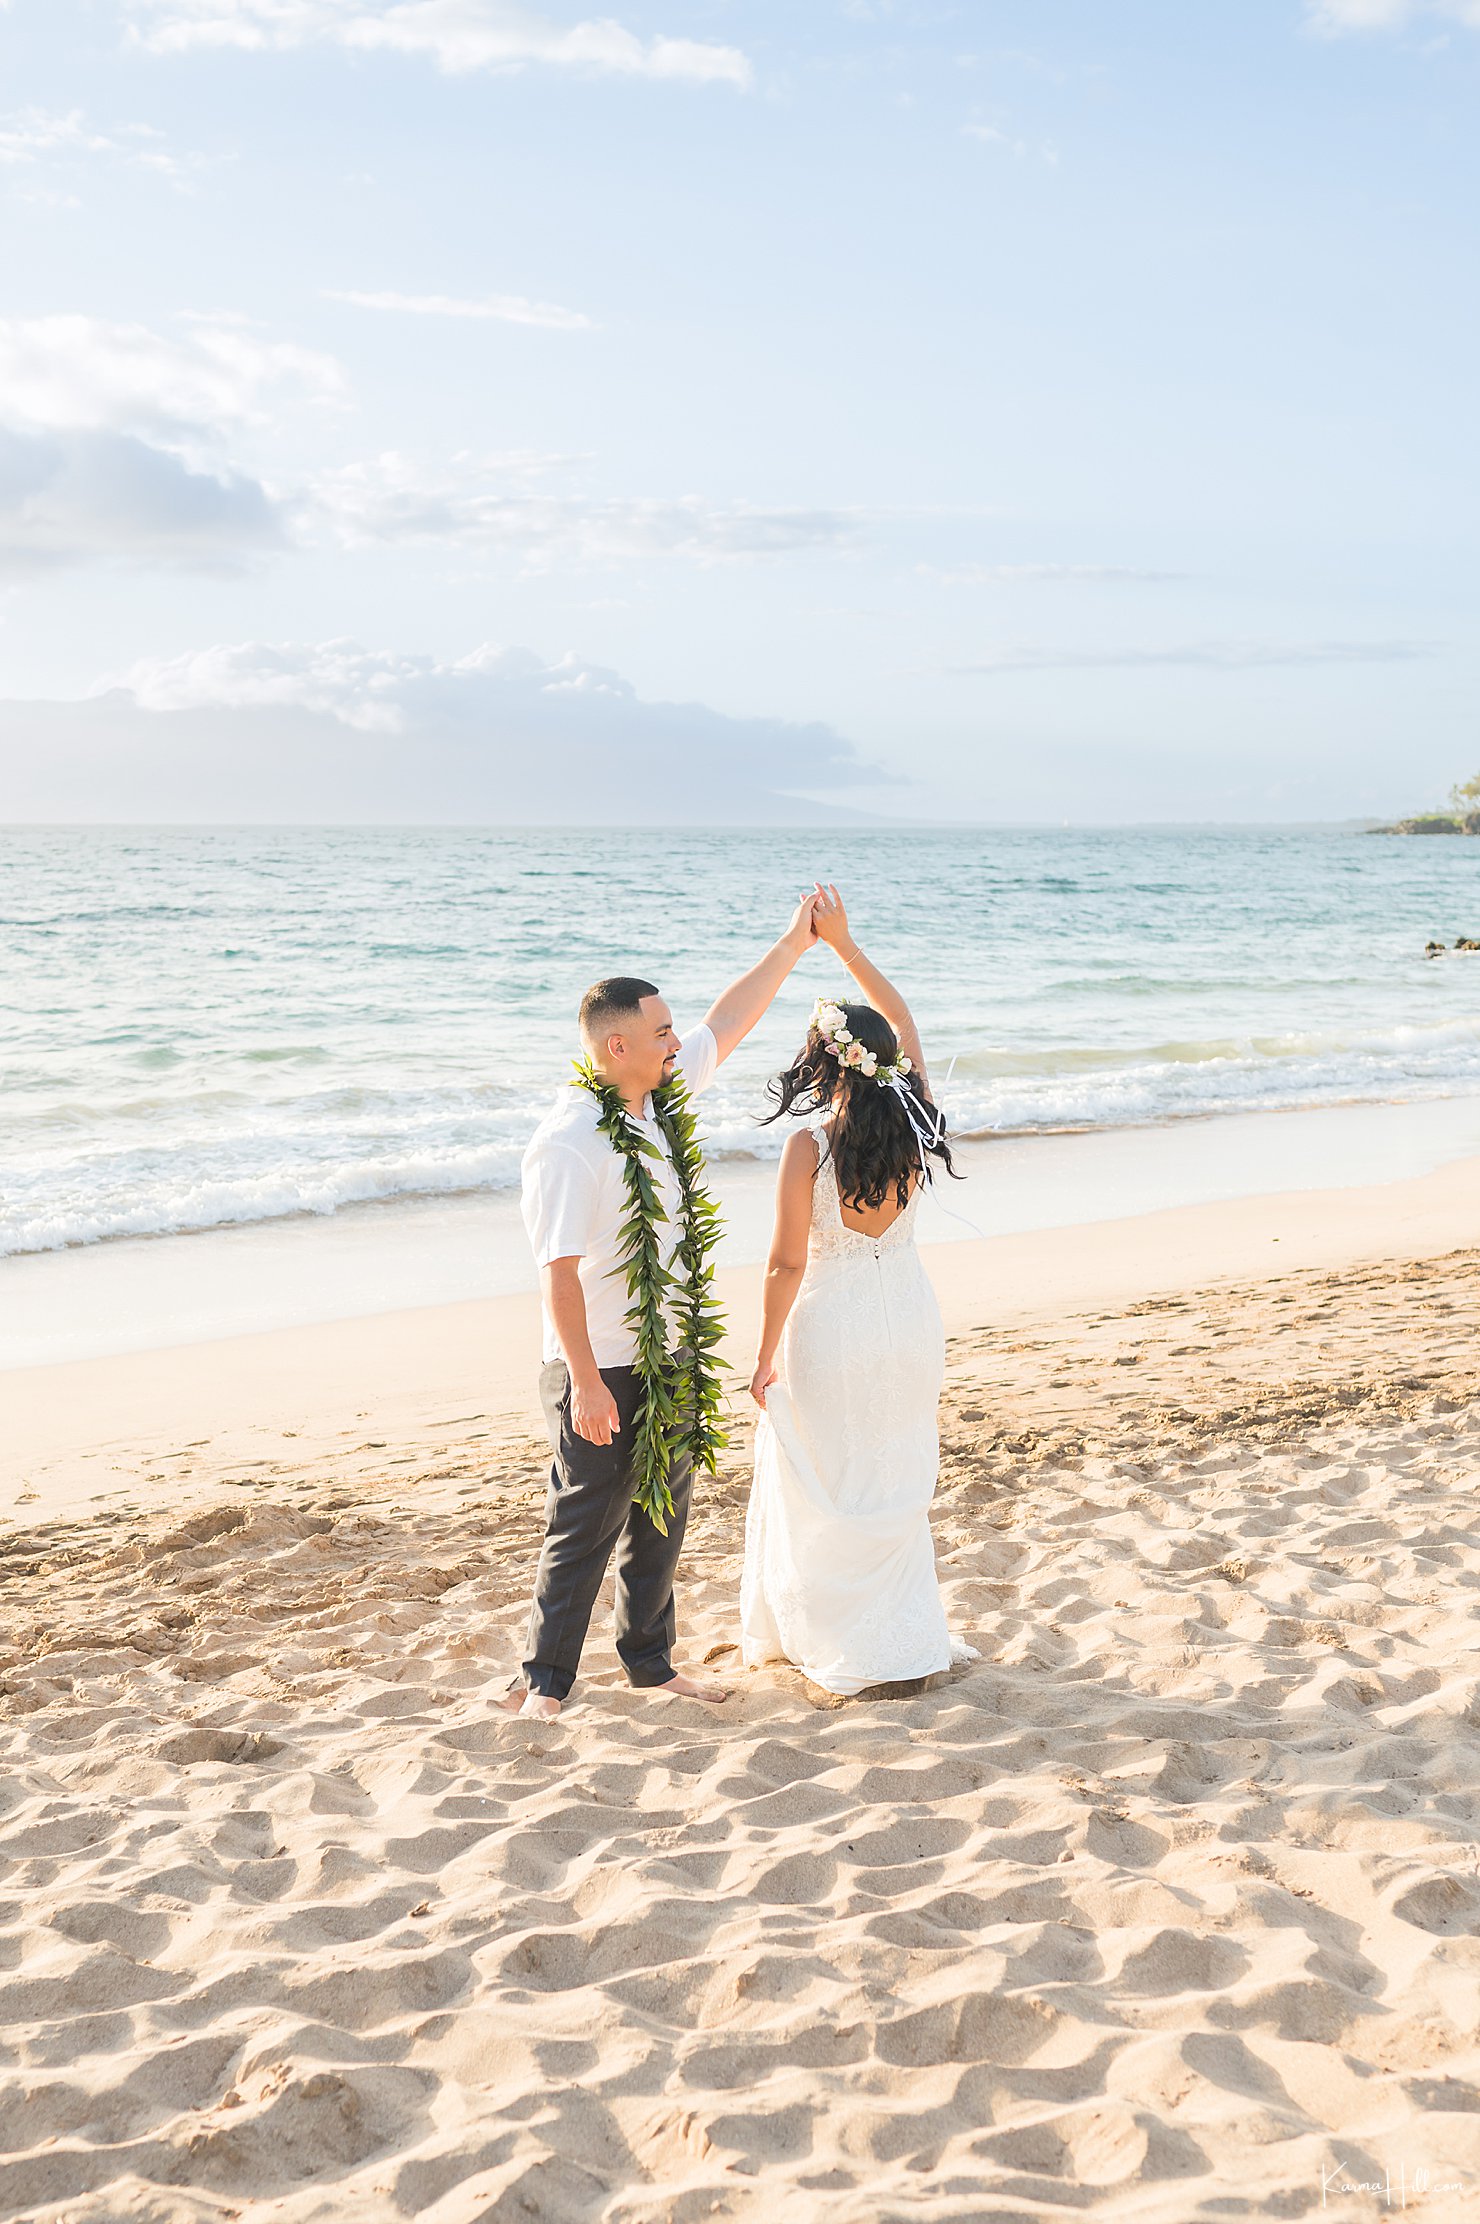 Hawaii marriage license